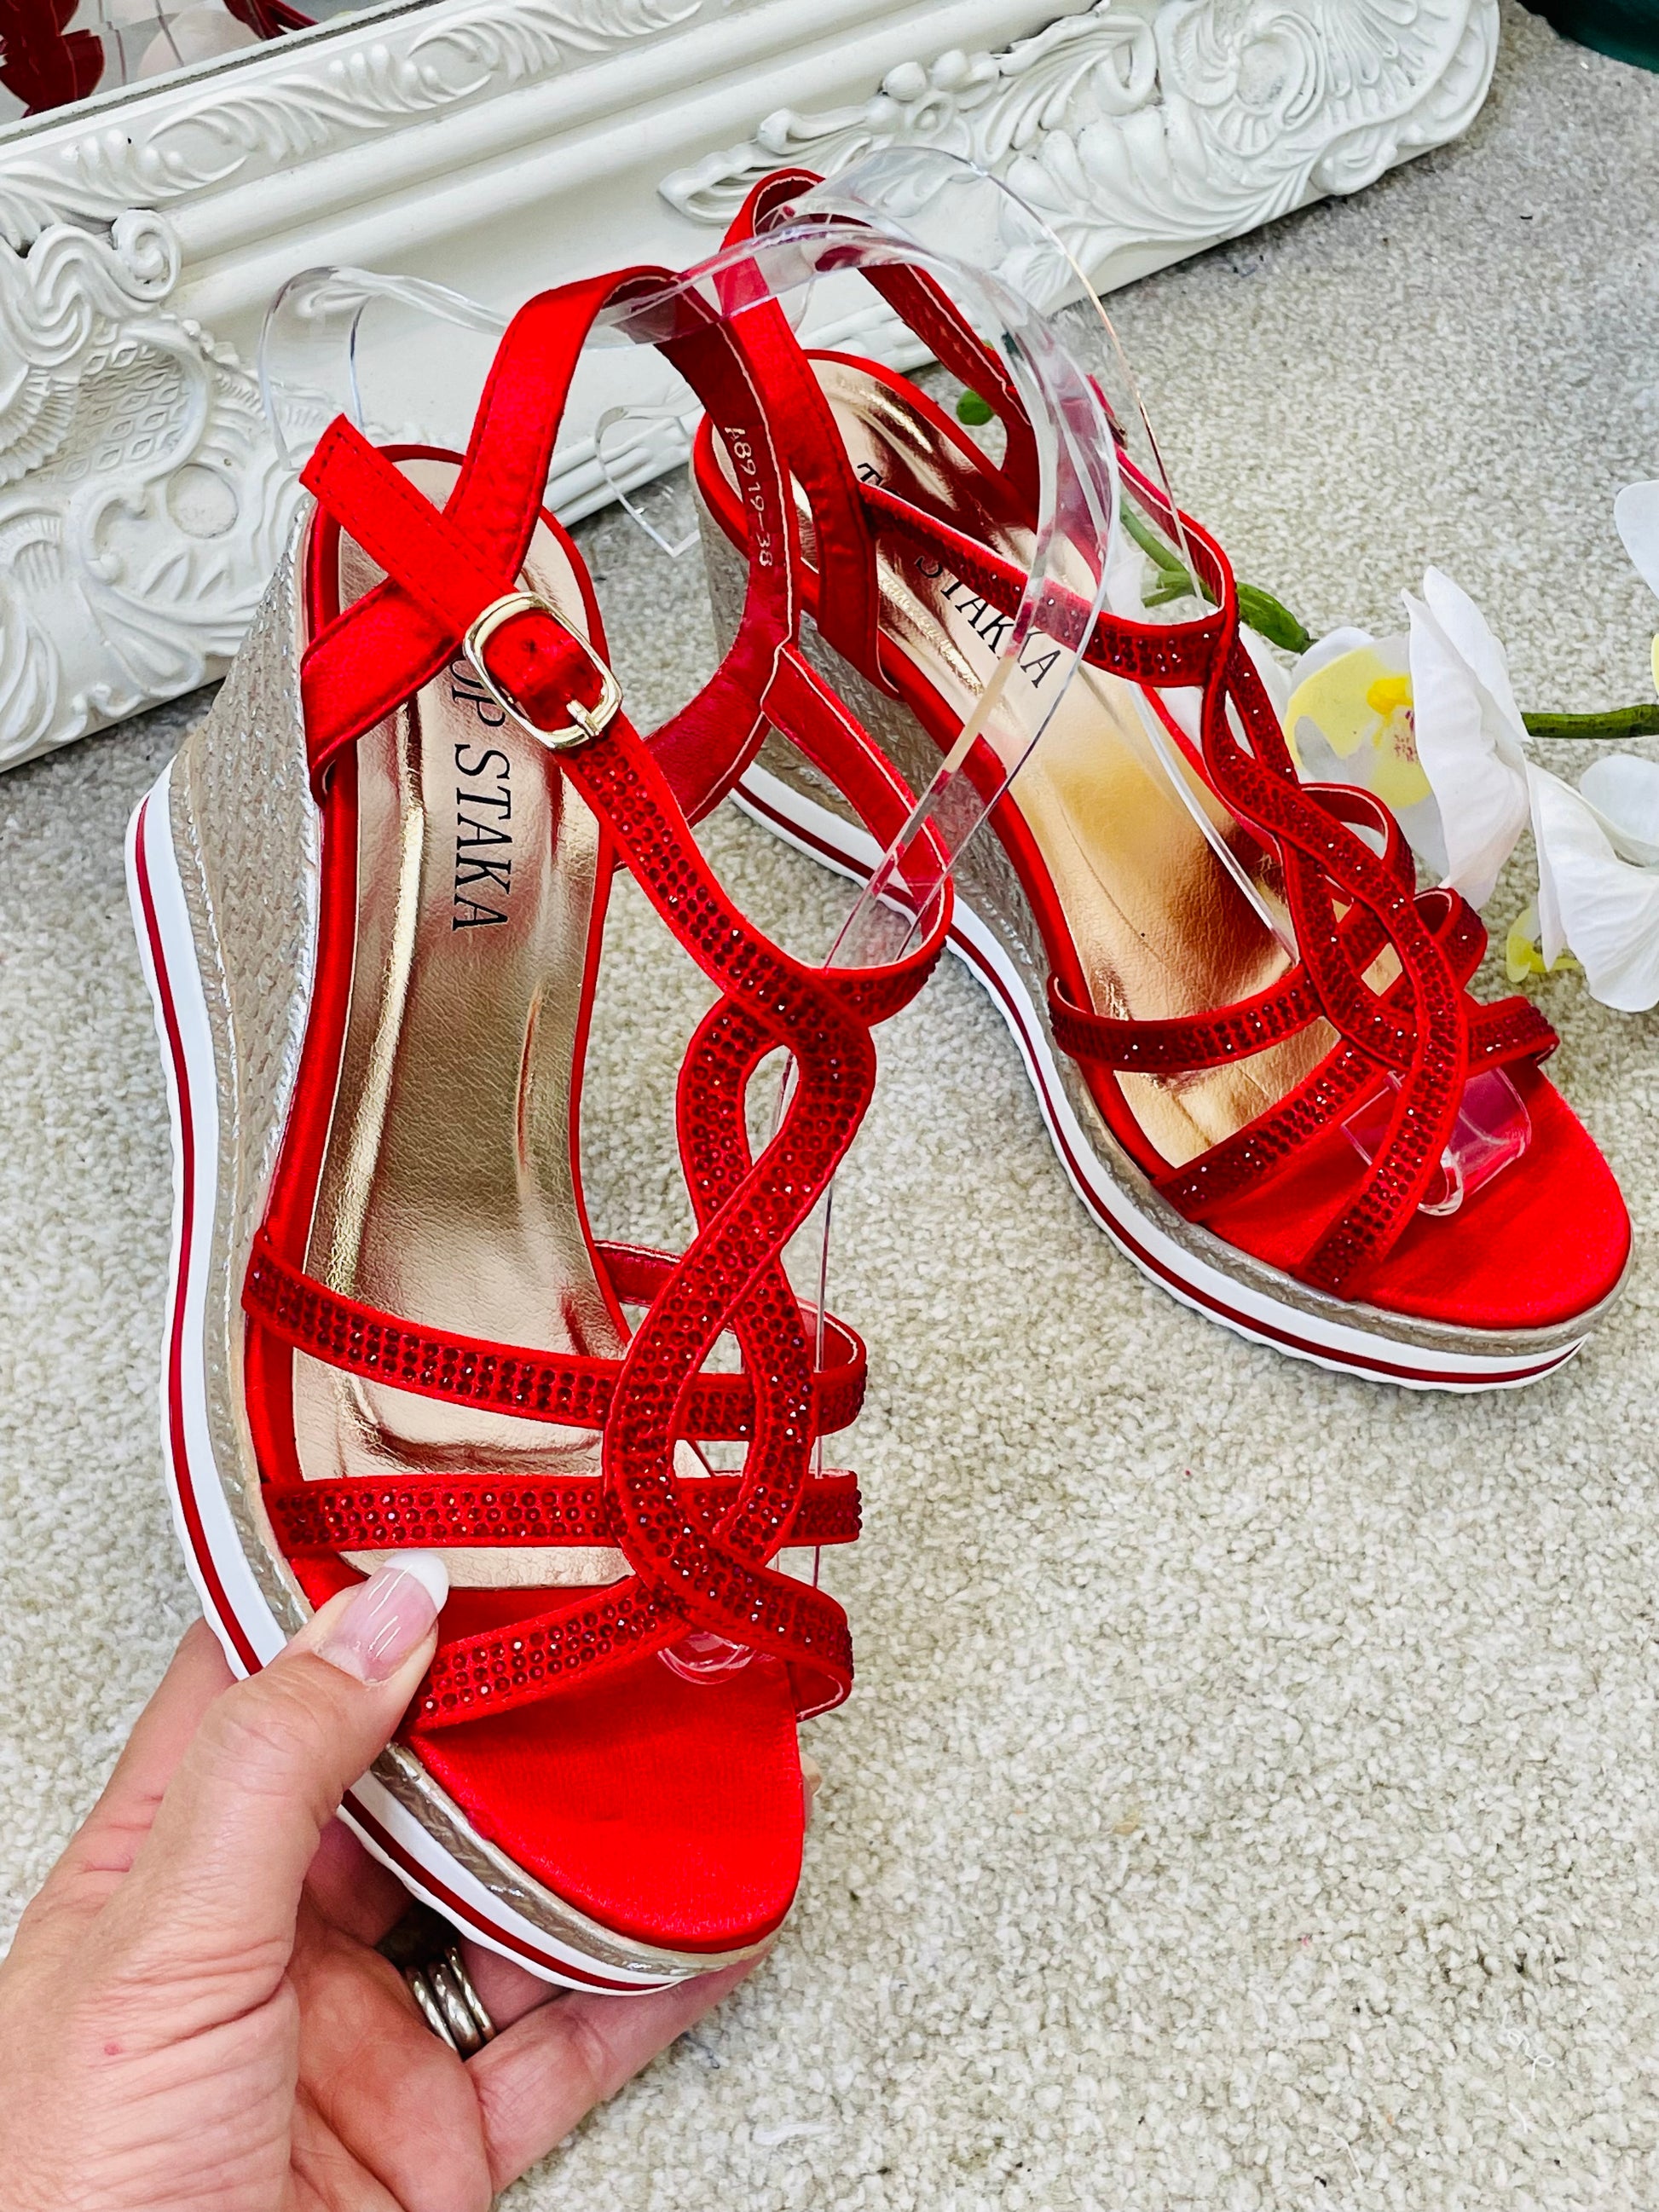 sparkly-red-wedge-heel-sandals-8919